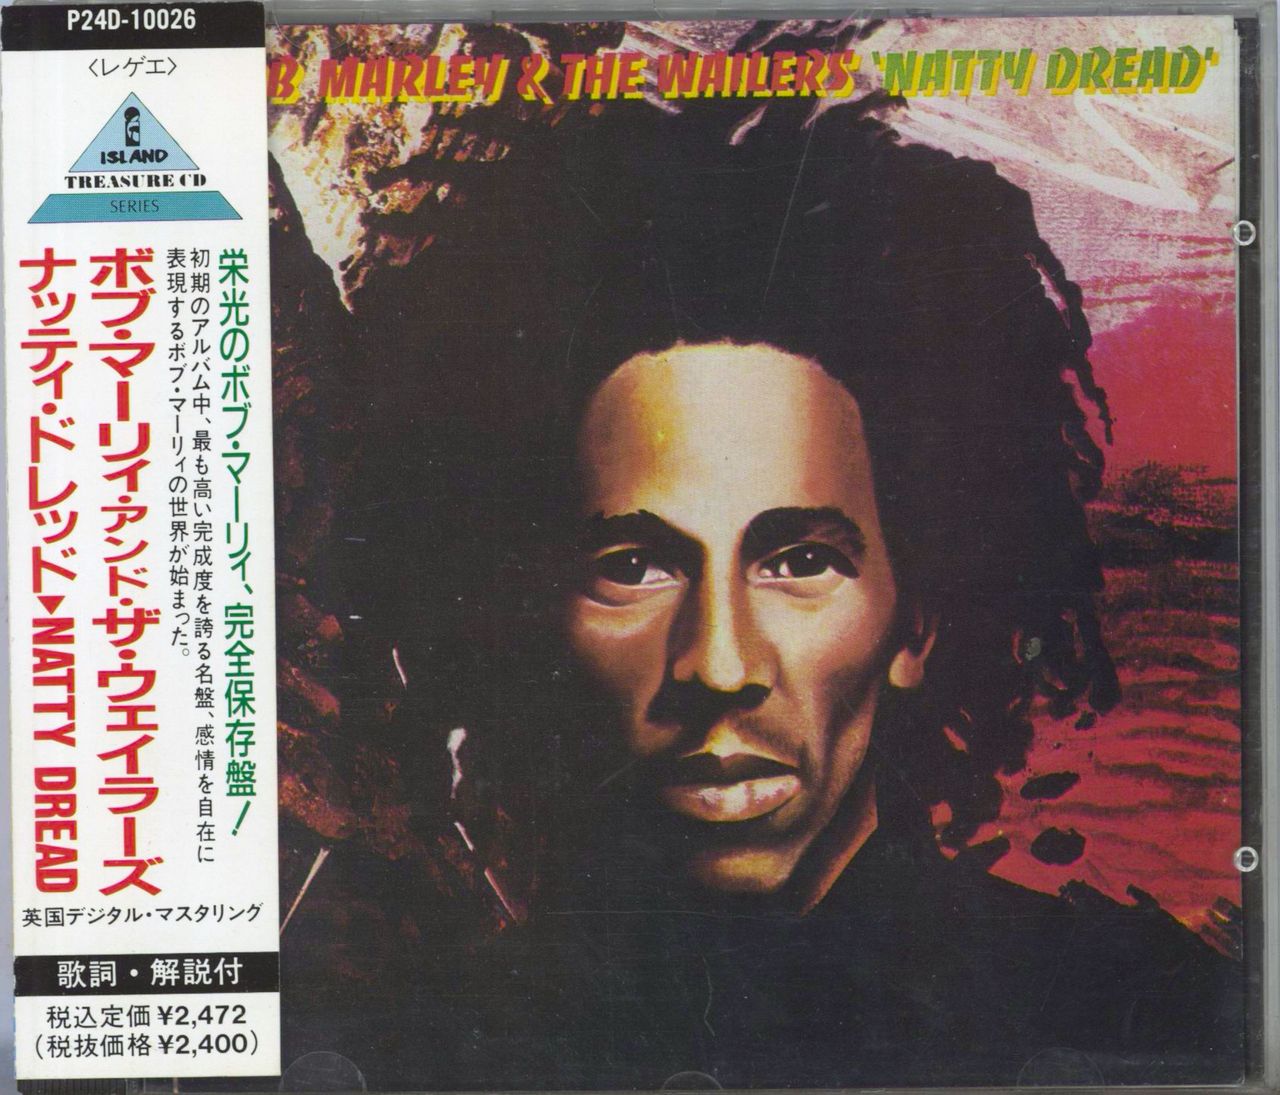 Bob Marley & The Wailers Natty Dread Japanese CD album — RareVinyl.com